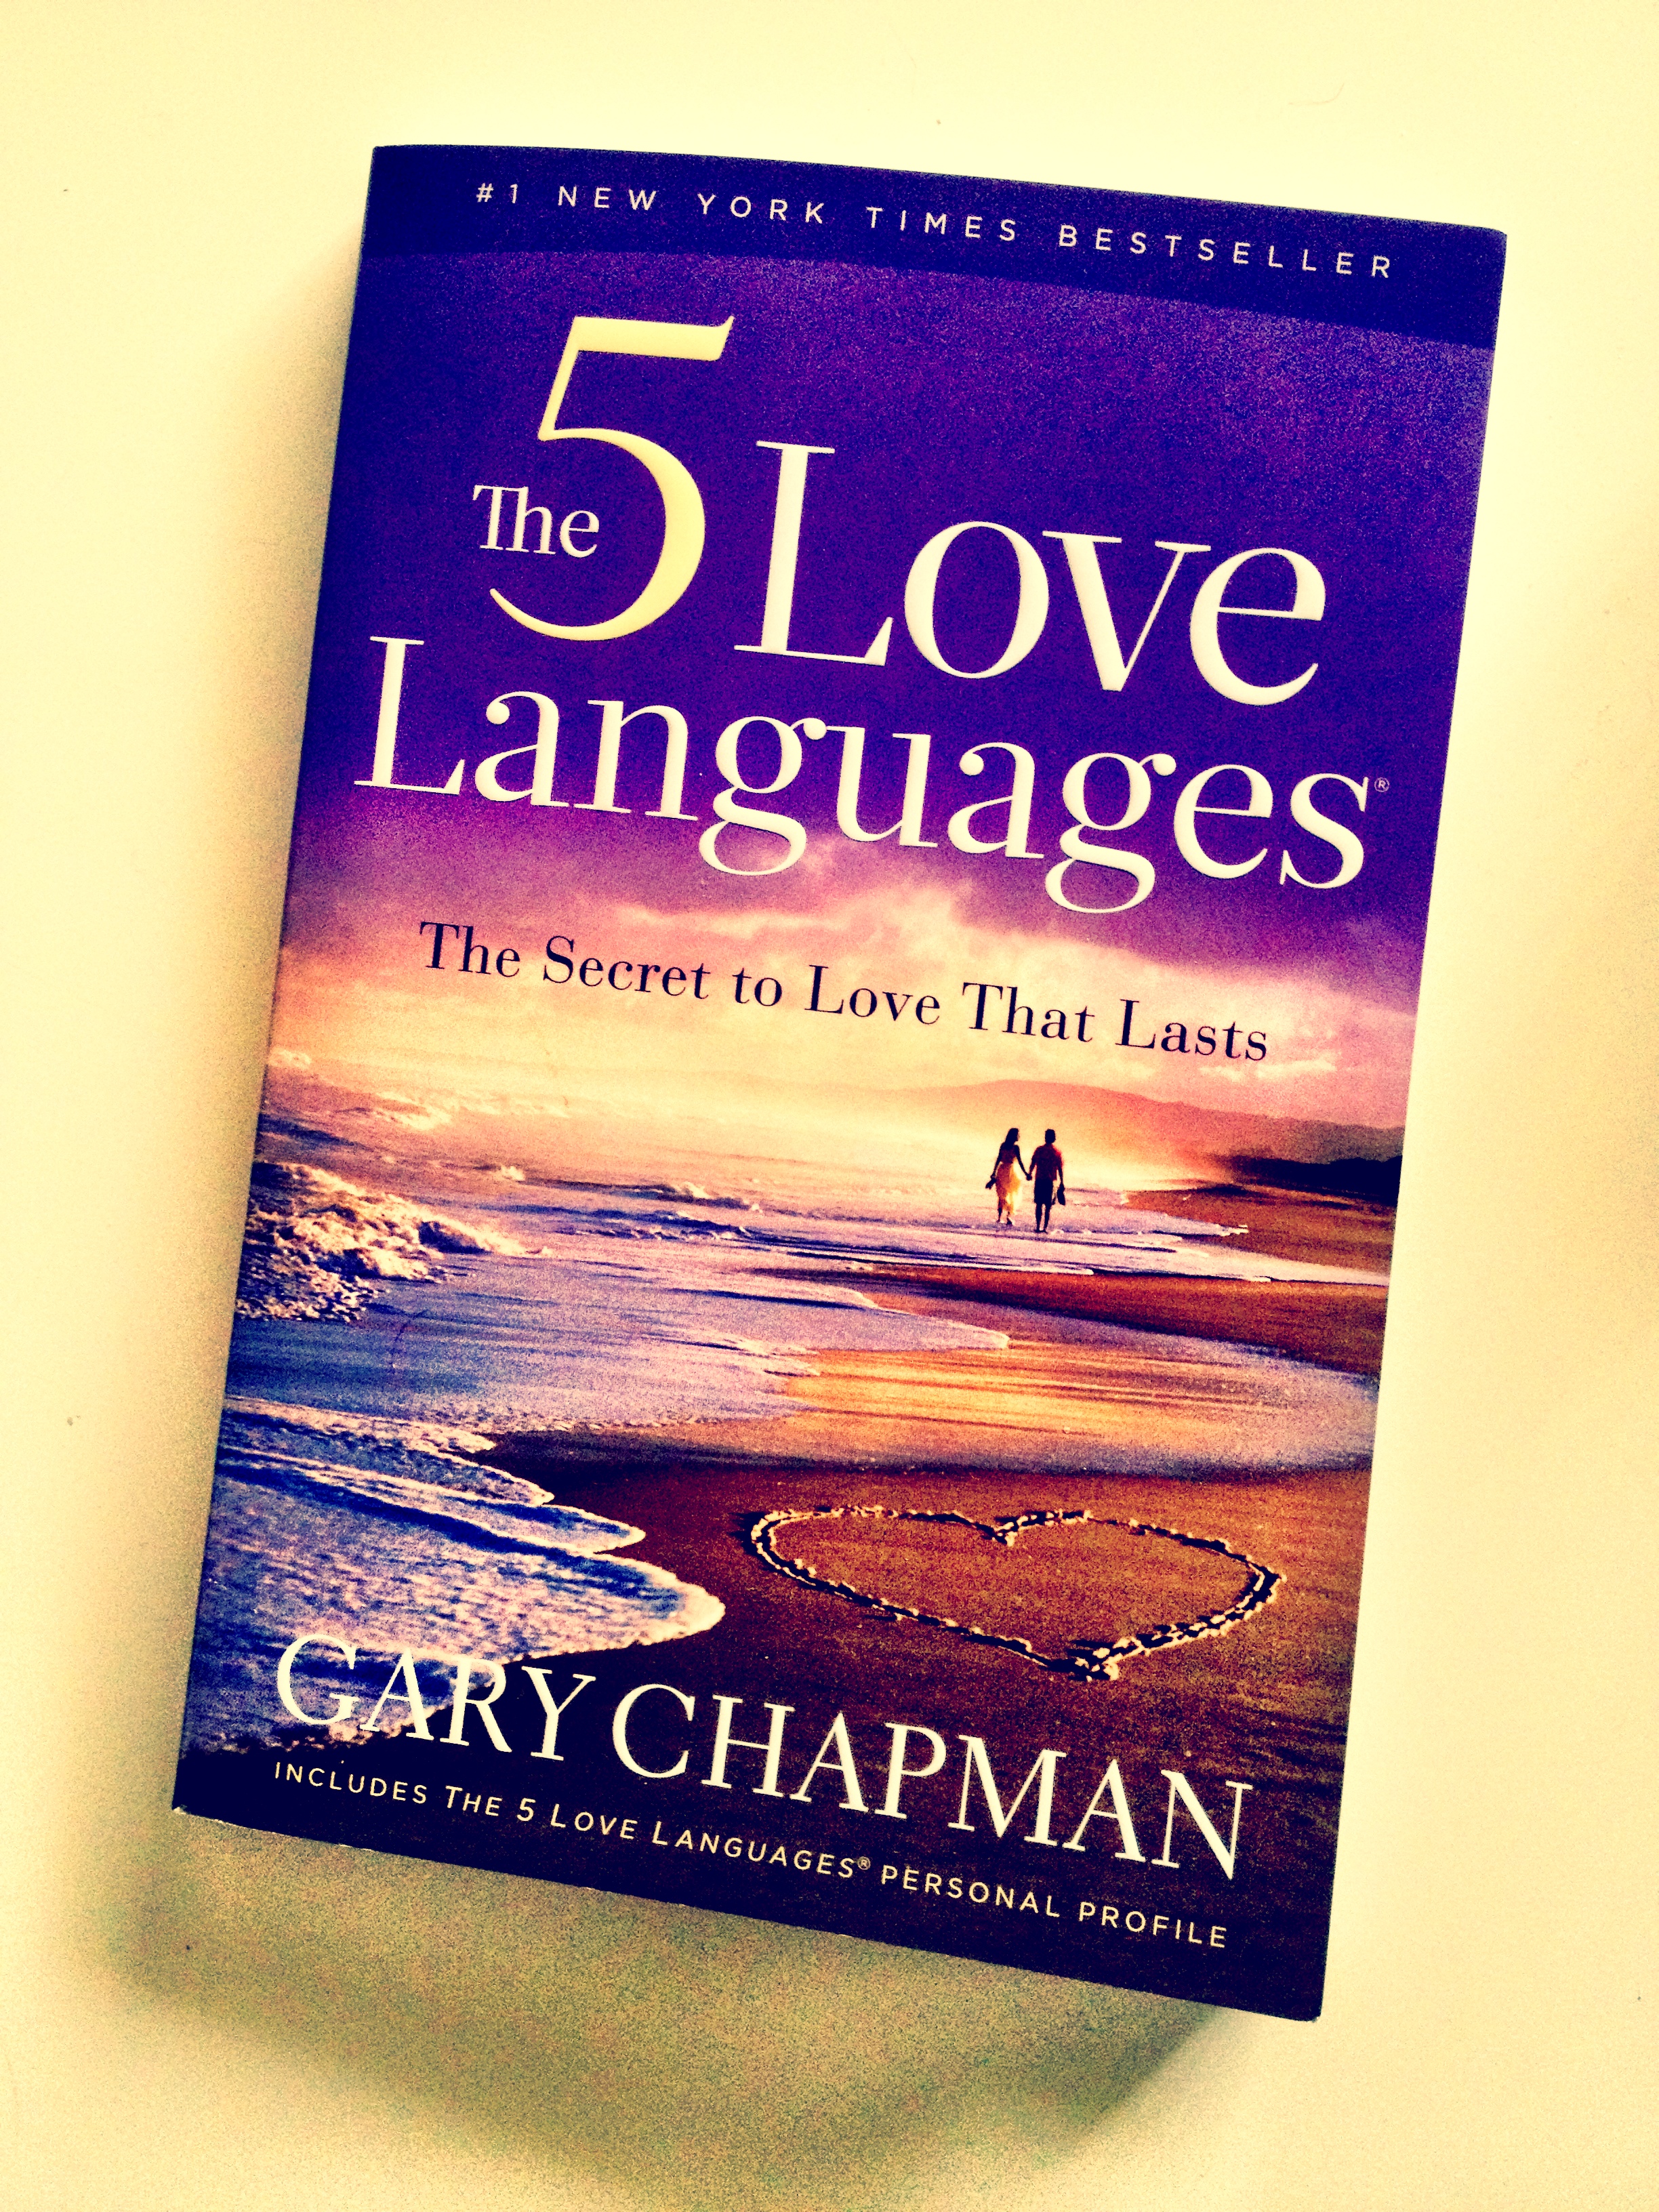 Книга язык звезд. 5 Love languages by Gary Chapman. Harry Chapman 5 languages of Love. 5 Love languages book. Love language.